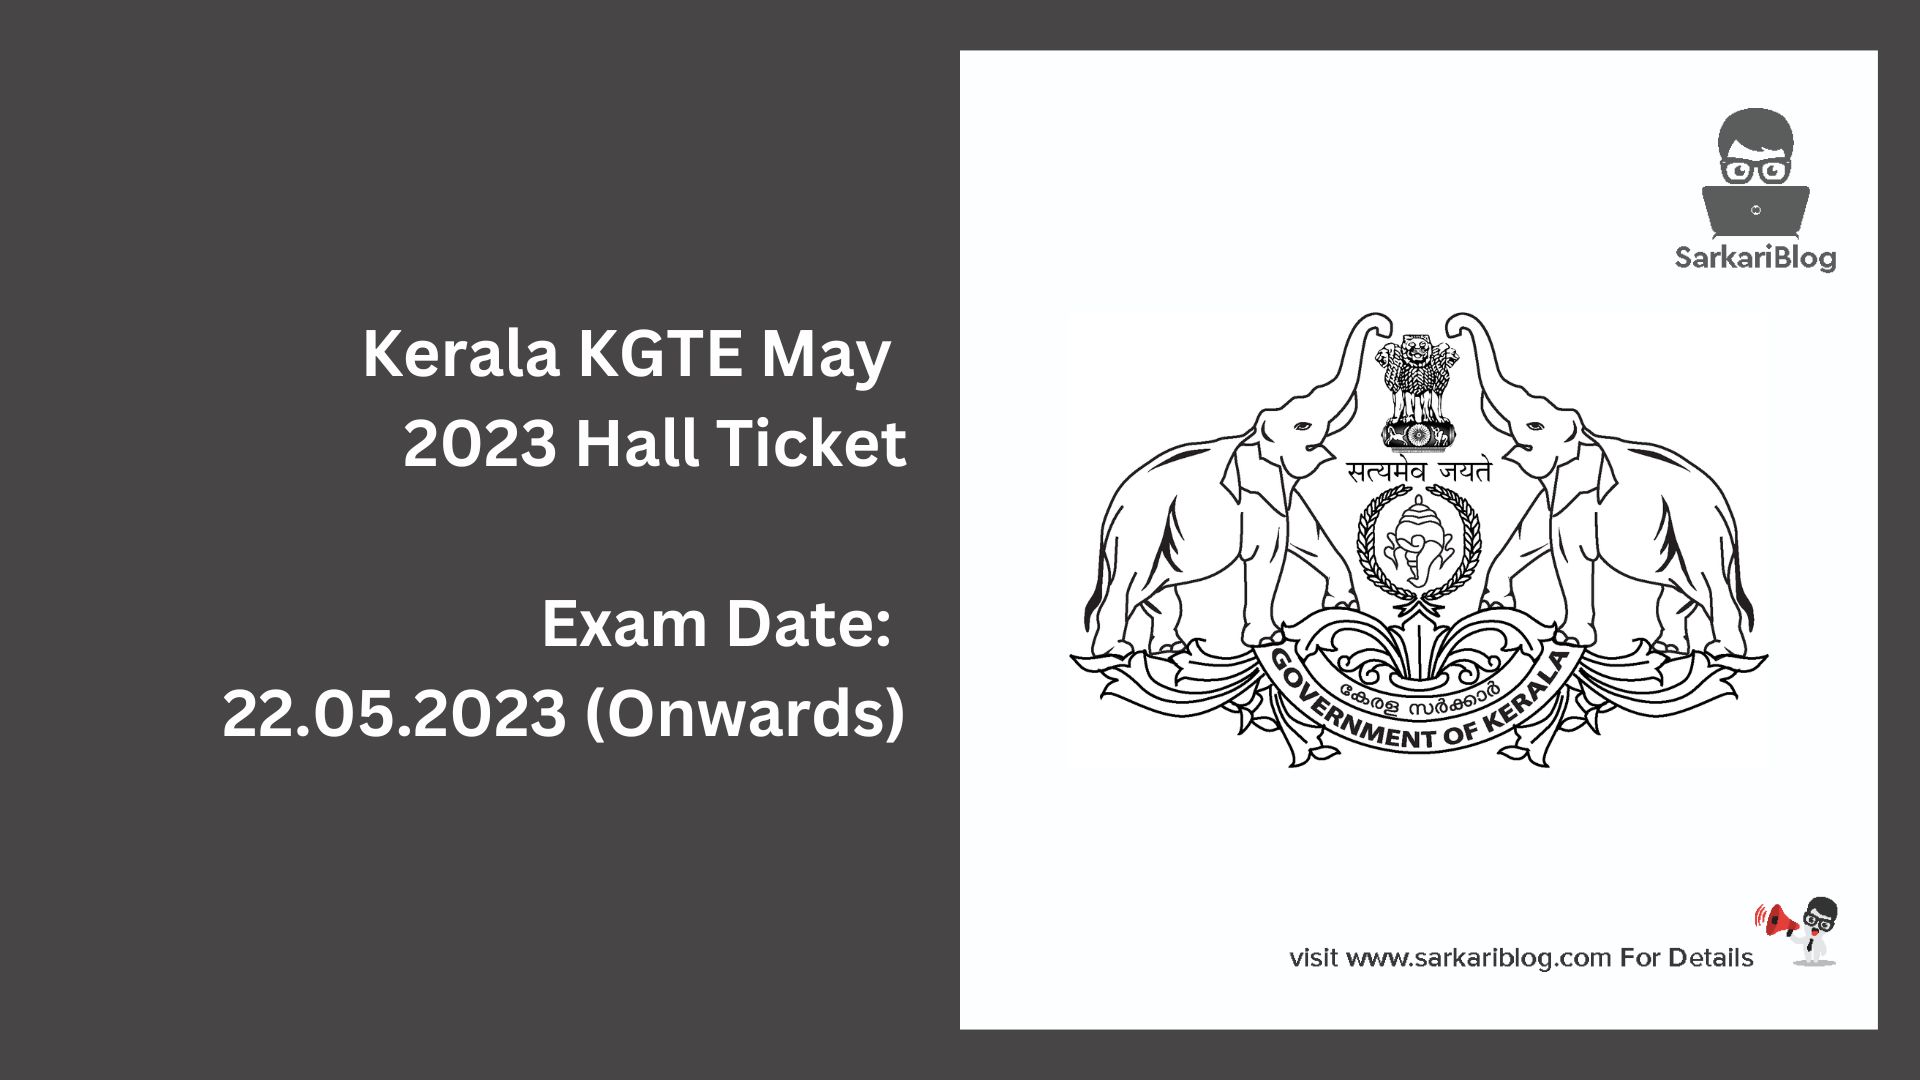 Kerala KGTE May 2023 Hall Ticket